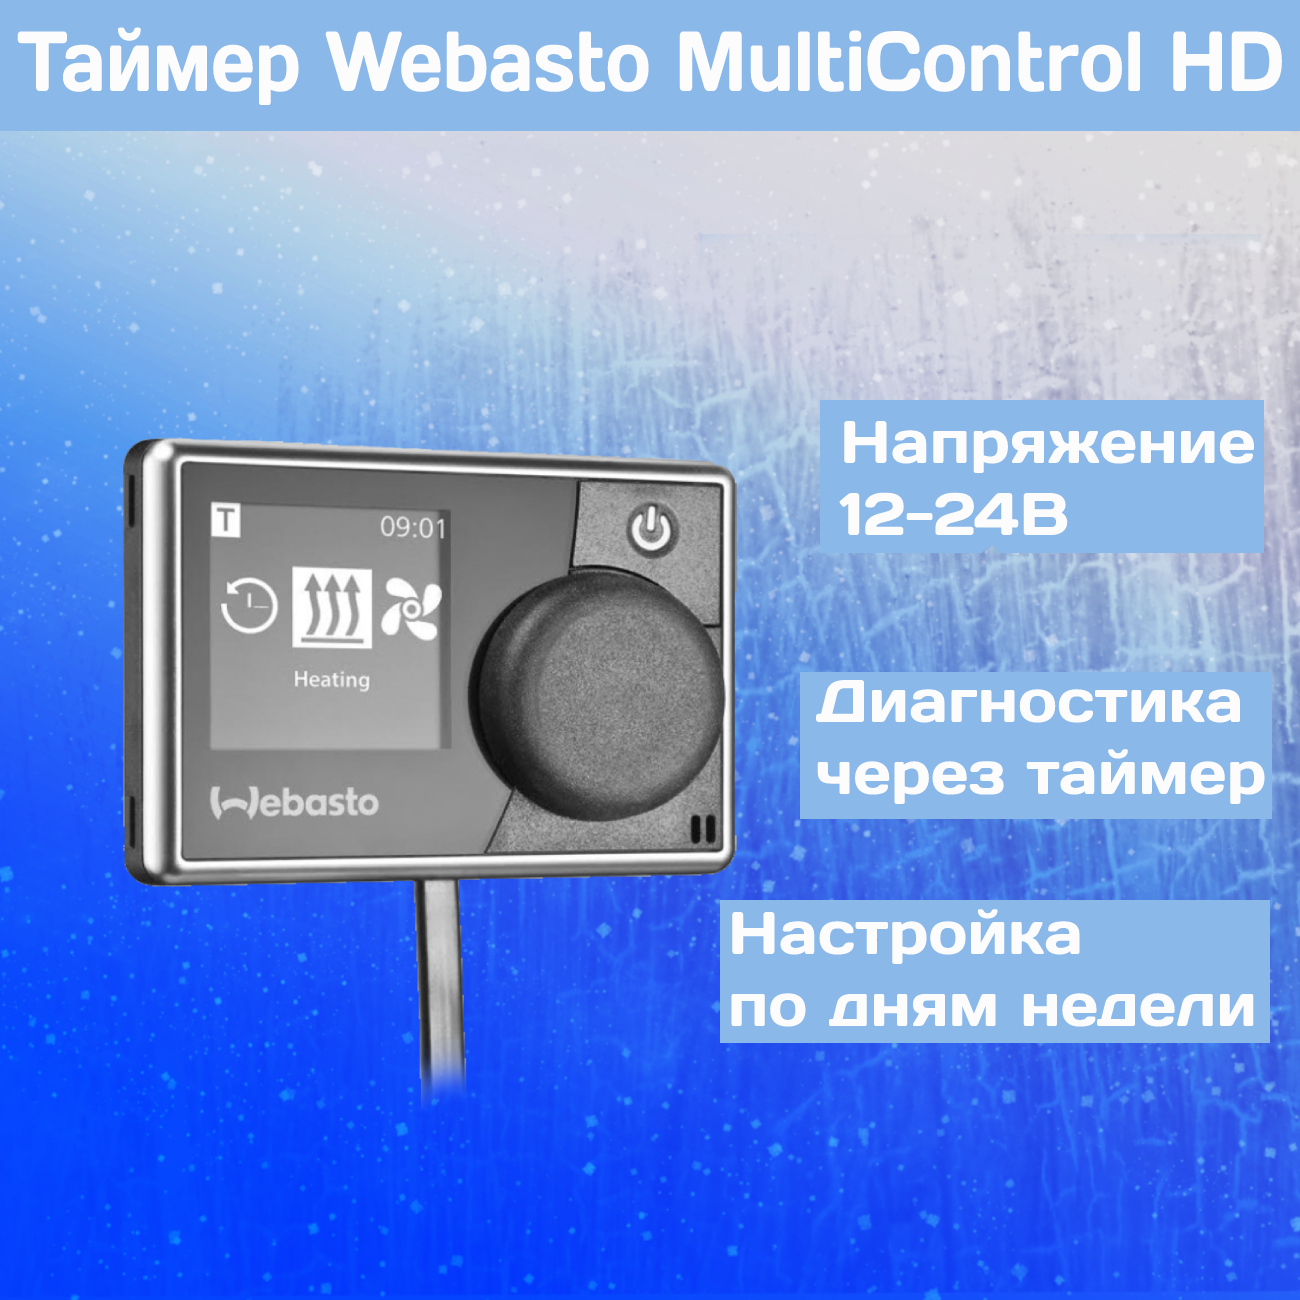 9030025d Webasto таймер MULTICONTROL HD. Webasto 9029783a таймер MULTICONTROL. Webasto таймер 1531. Таймер Multi Control HD (9030025). Таймер webasto